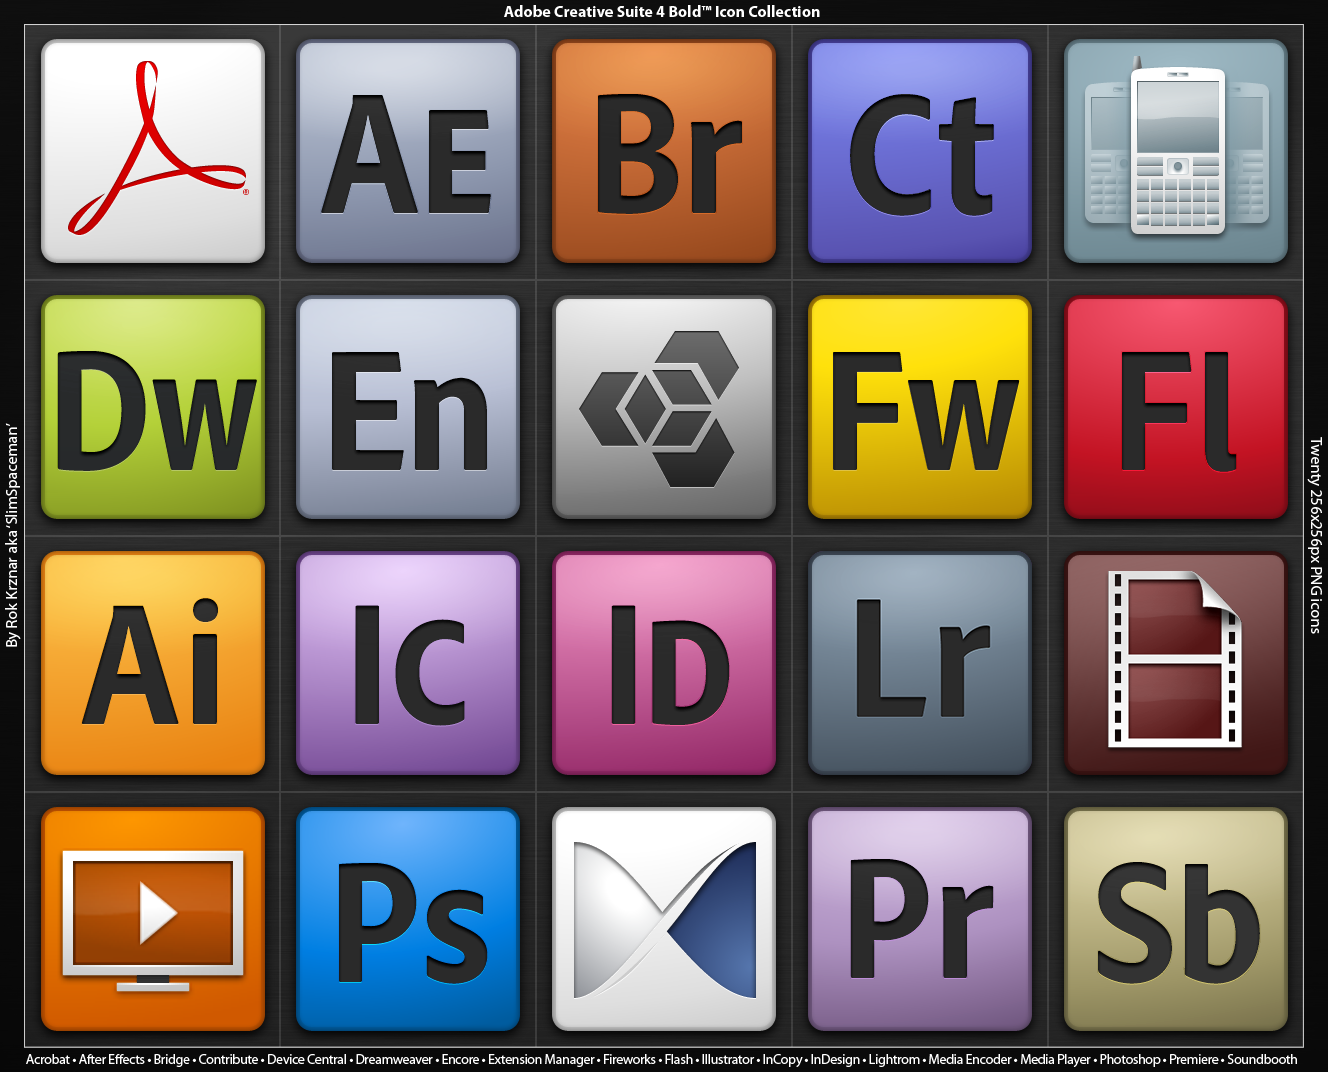 Adobe creative suite 4 master collection inc setup keygen free